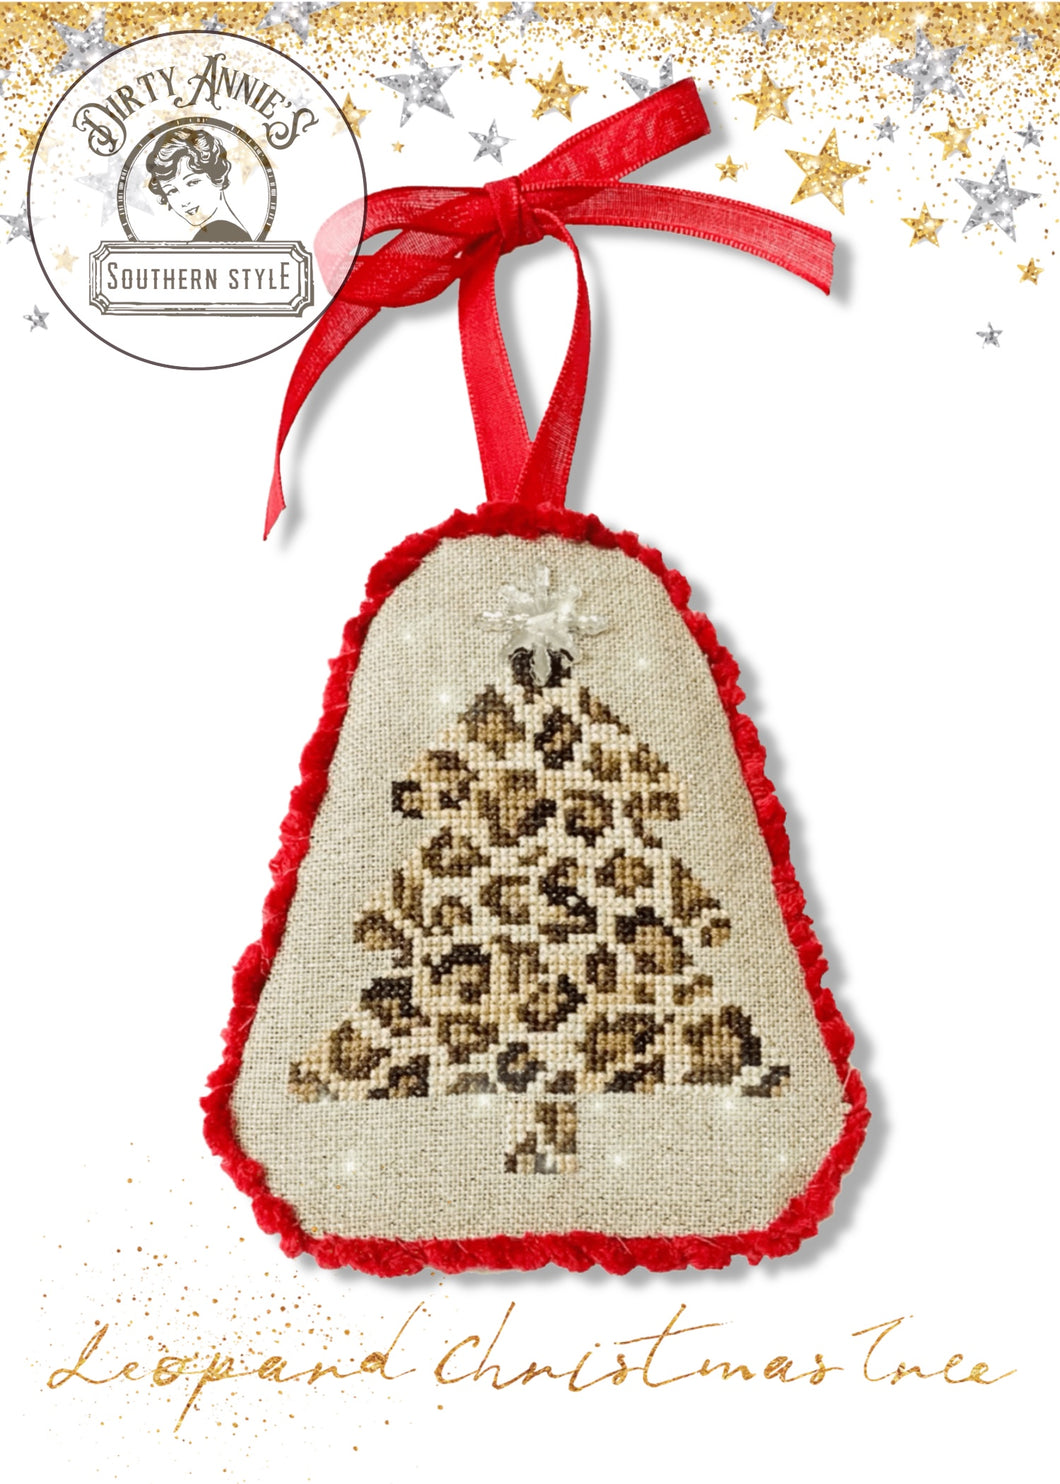 Christmas Tree - Leopard